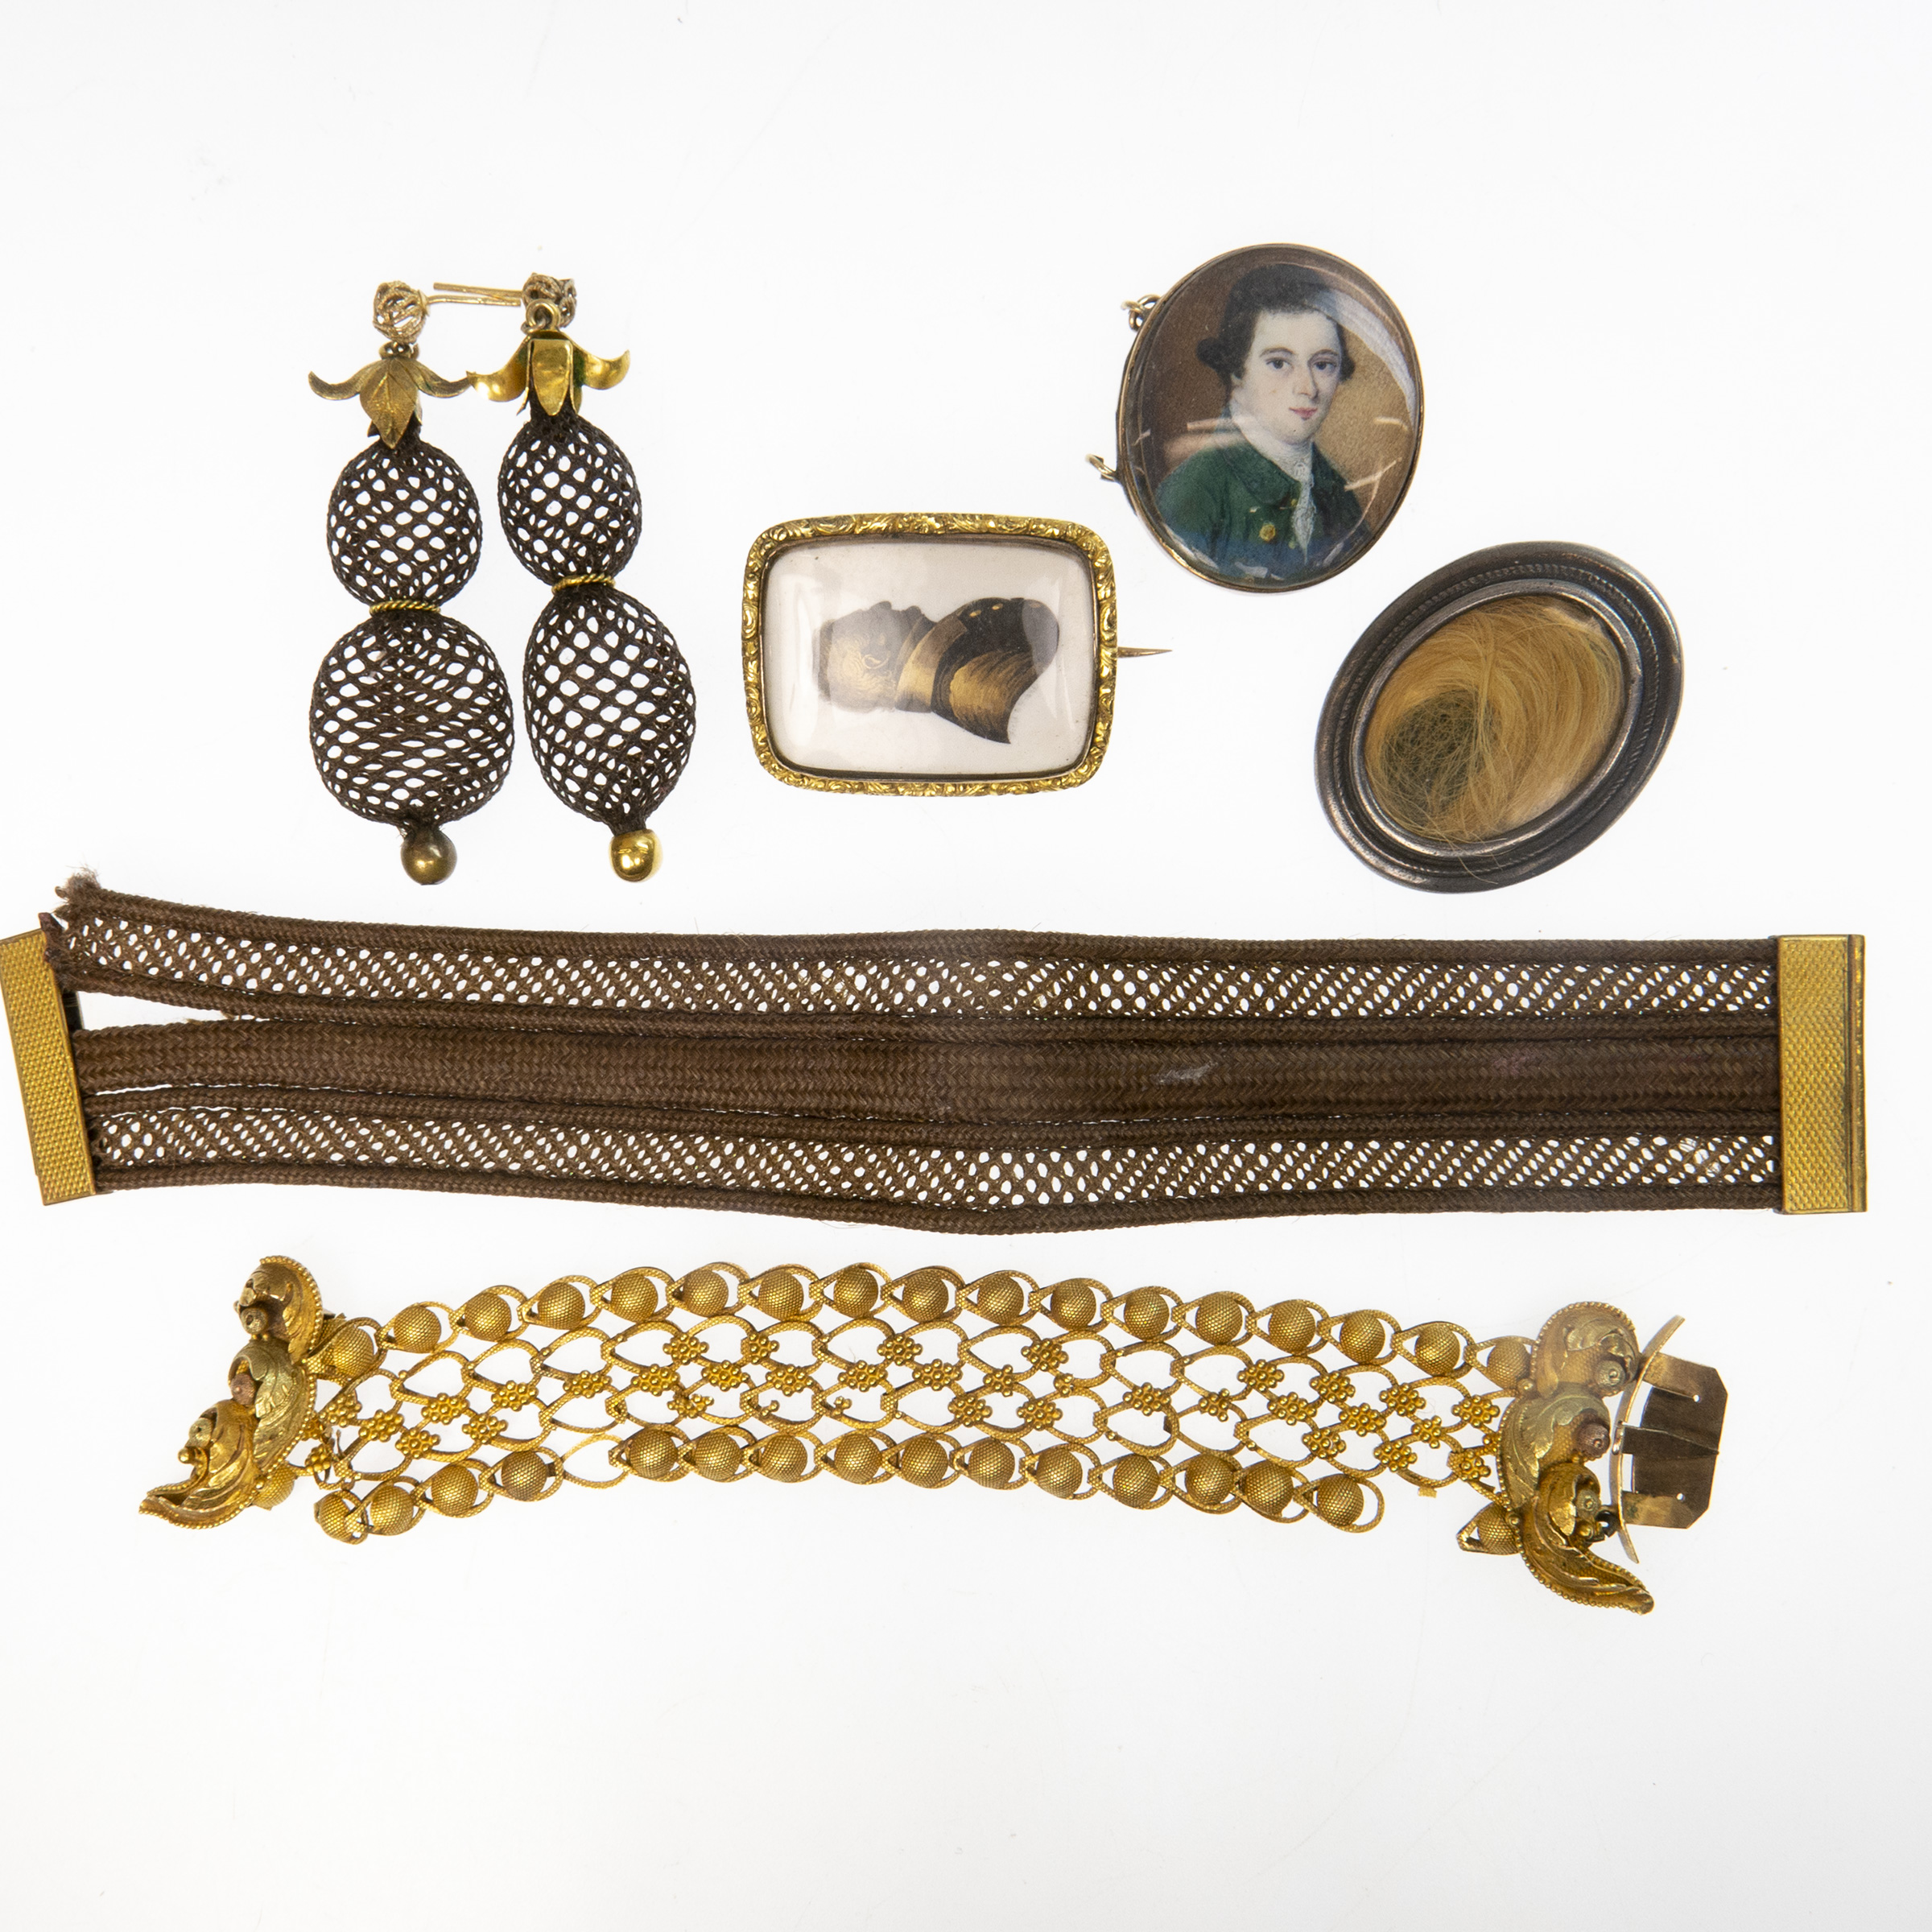 Small Quantity of 19th Century Jewellery